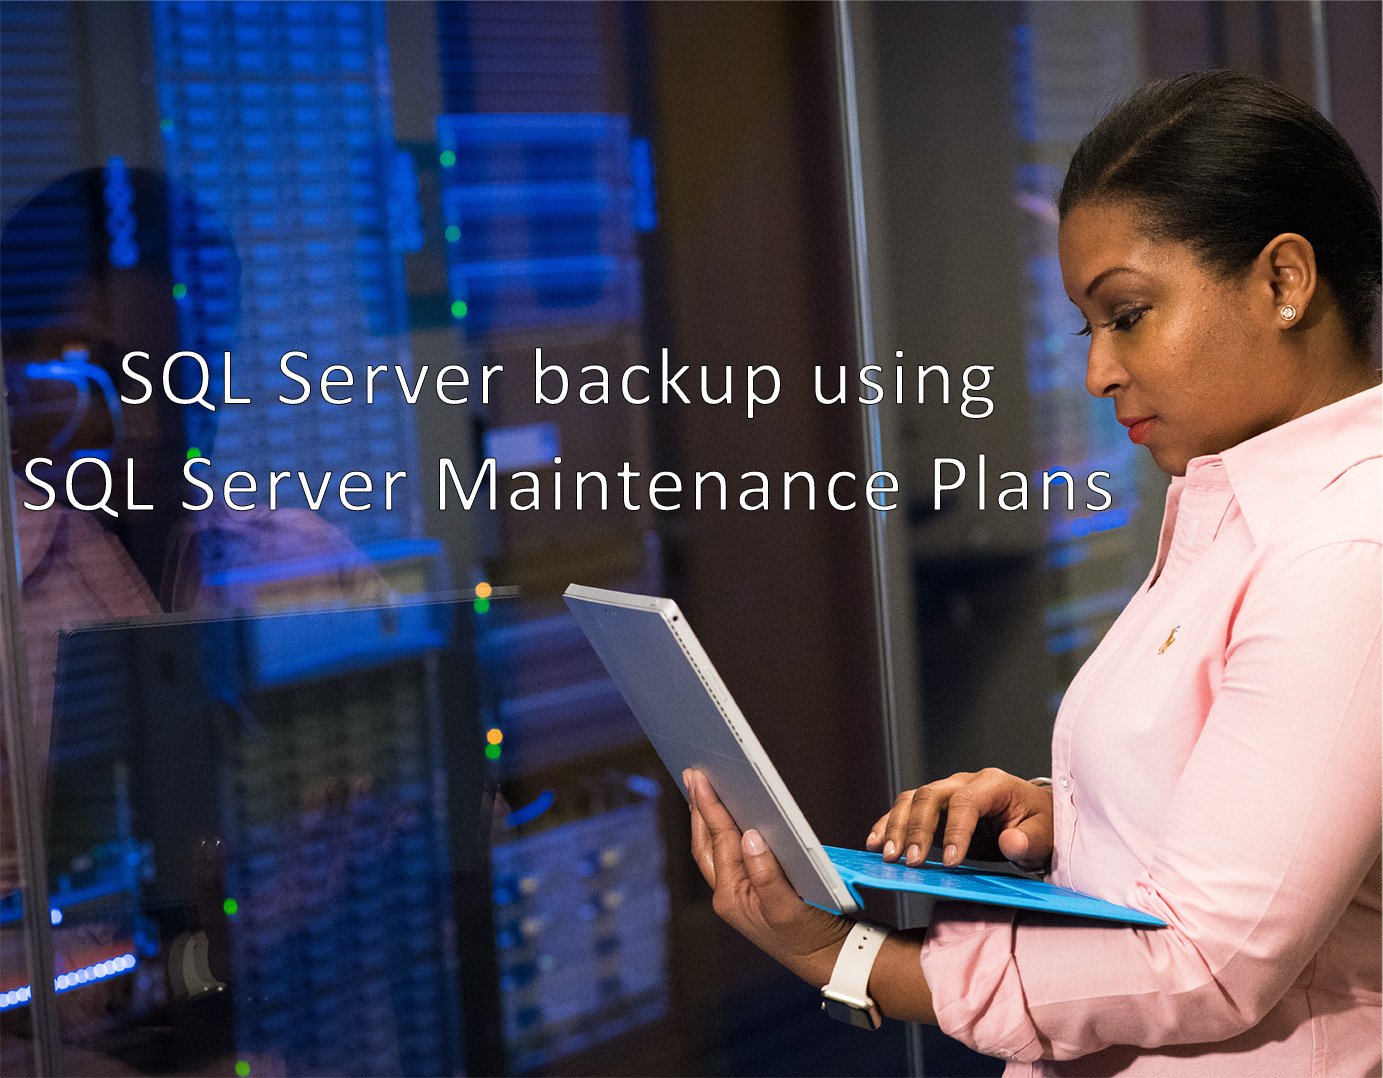 SQL Server backup using SQL Server Maintenance Plans